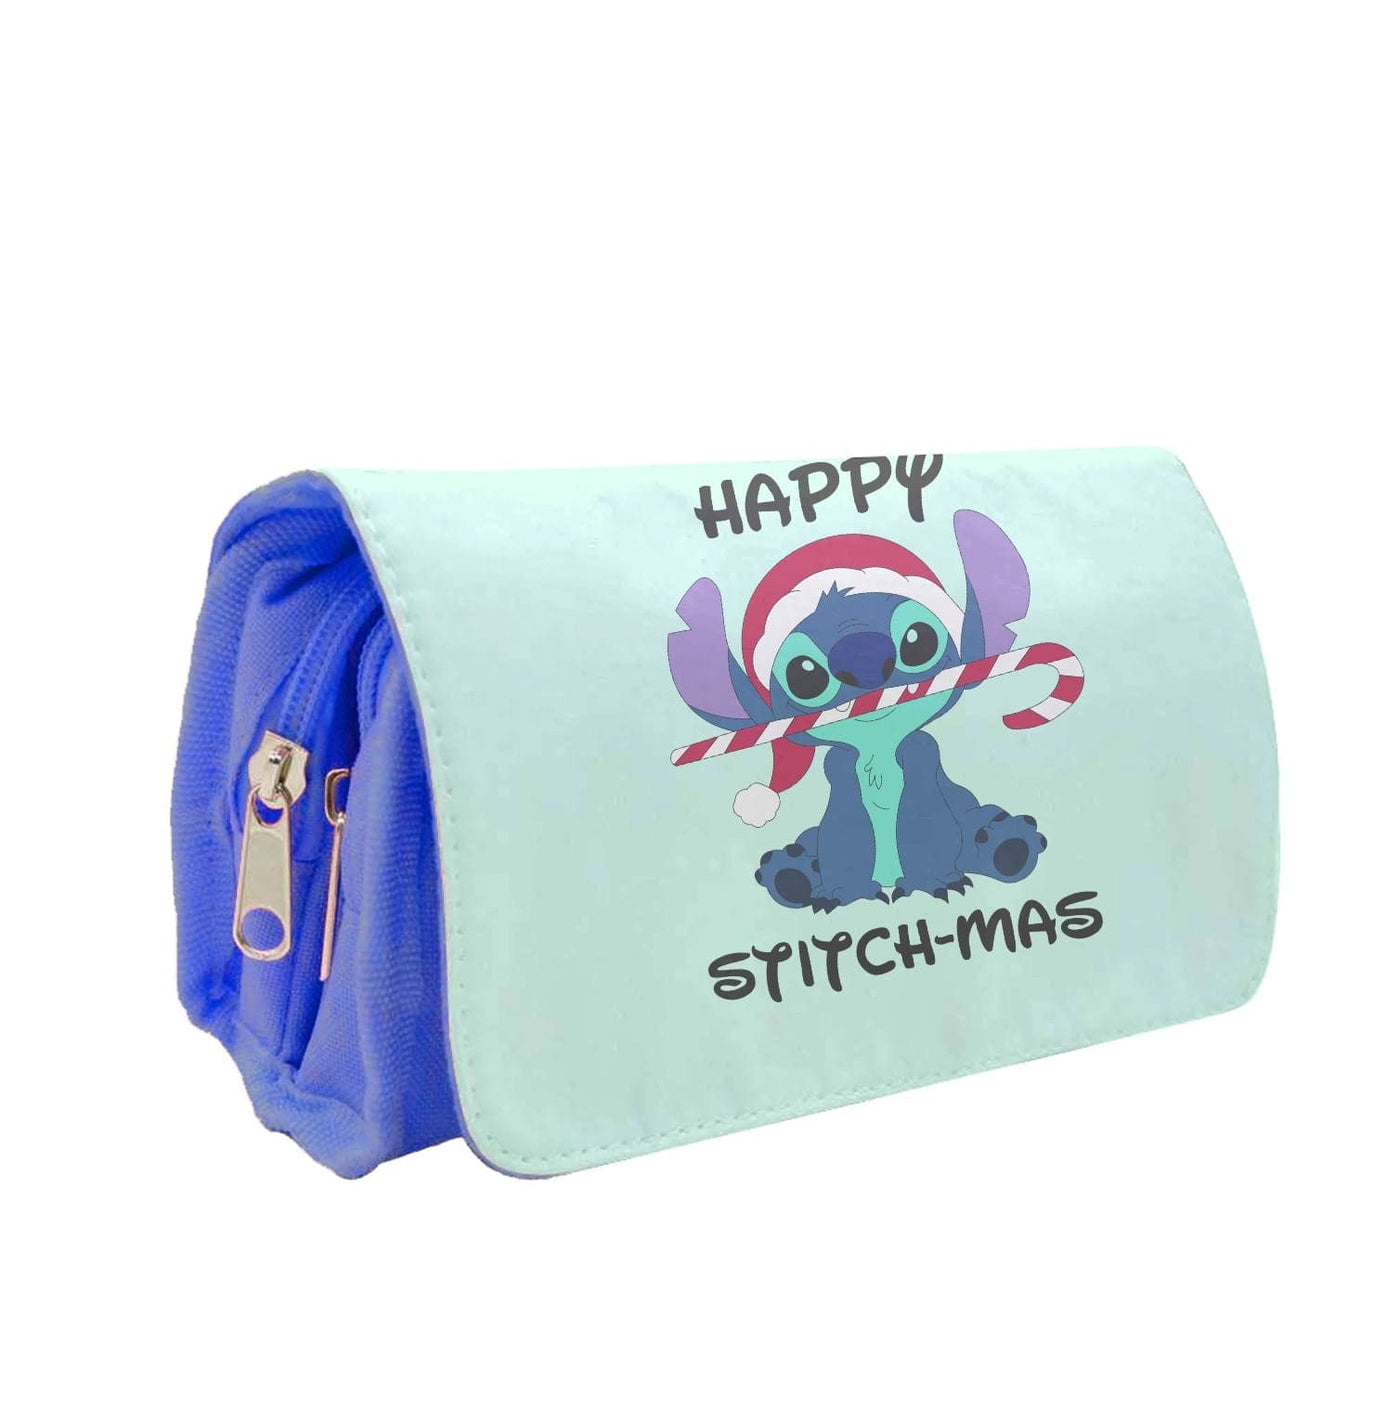 Happy Stitchmas - Christmas Pencil Case